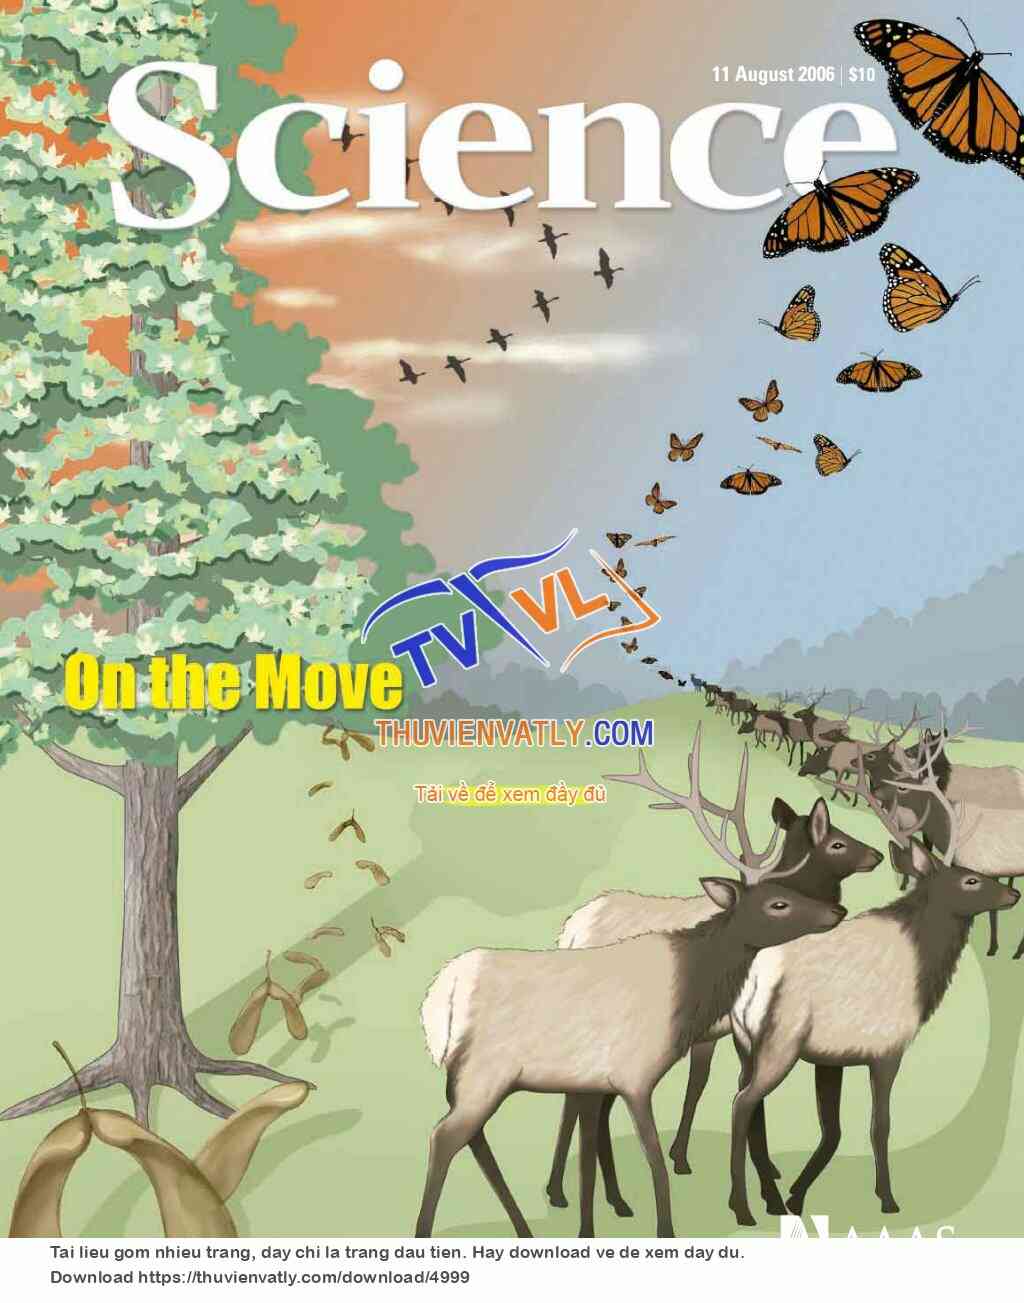 Science Magazine_2006-08-11